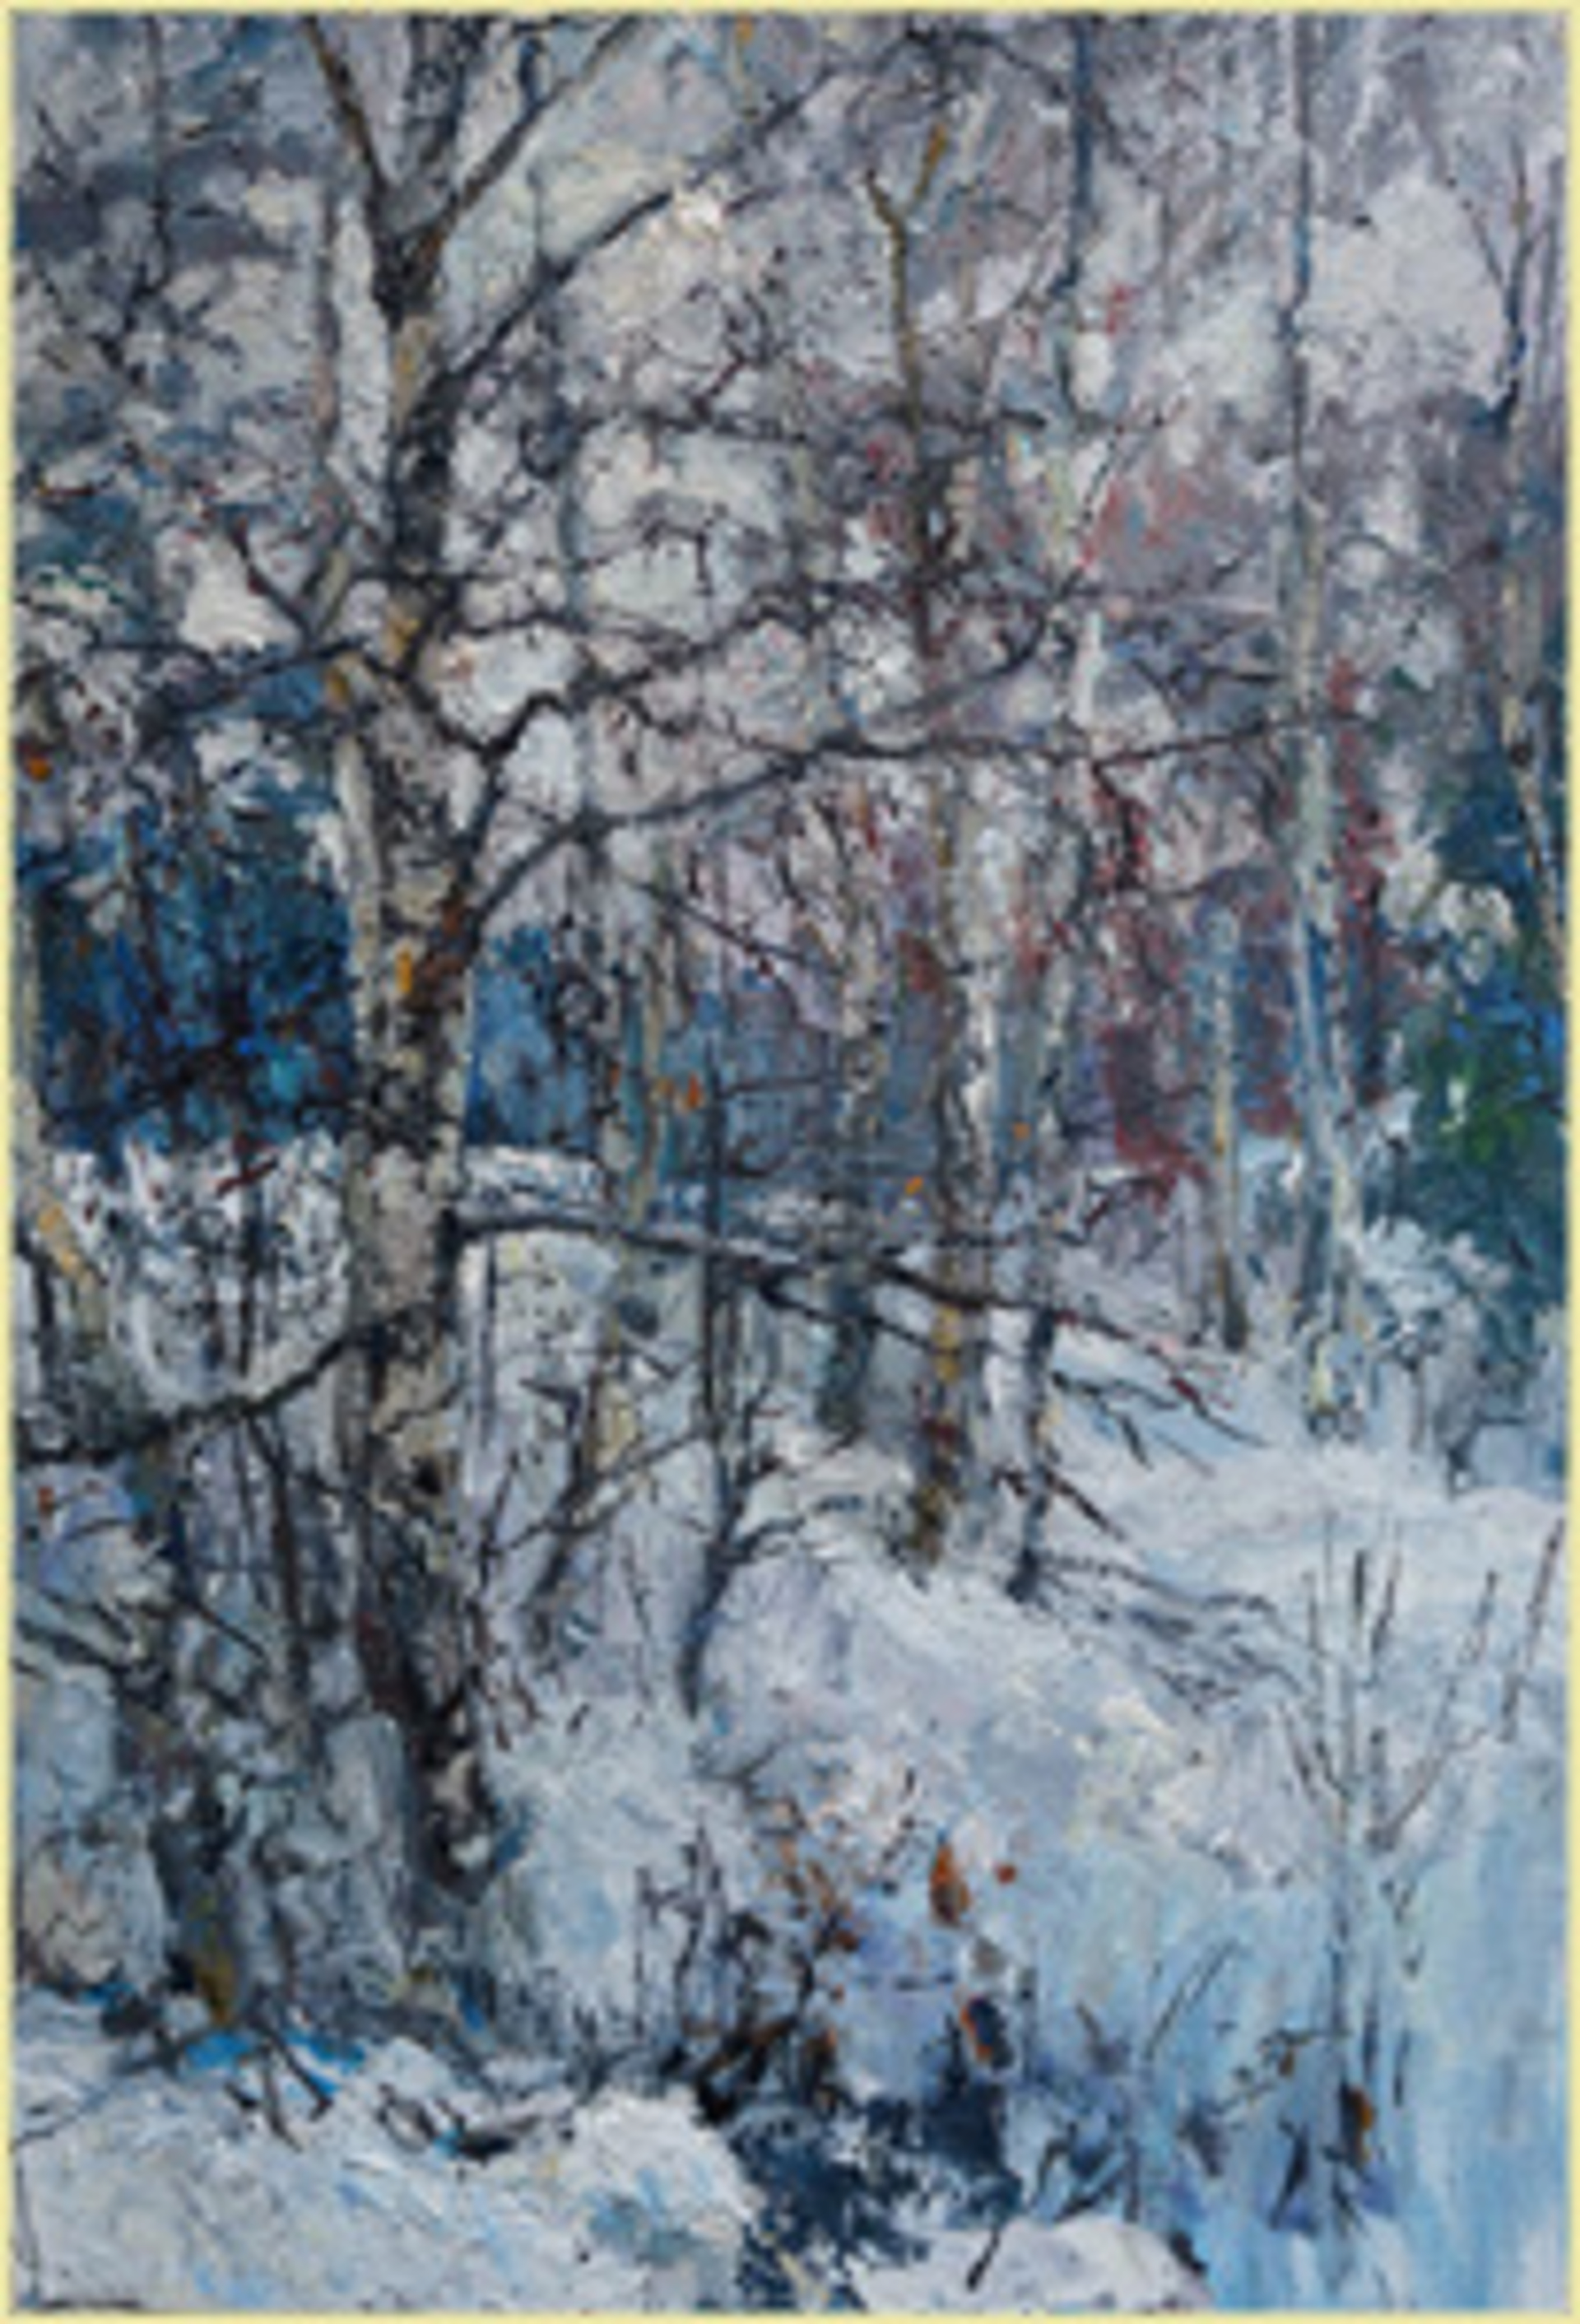 Snowfall by Ulrich Gleiter